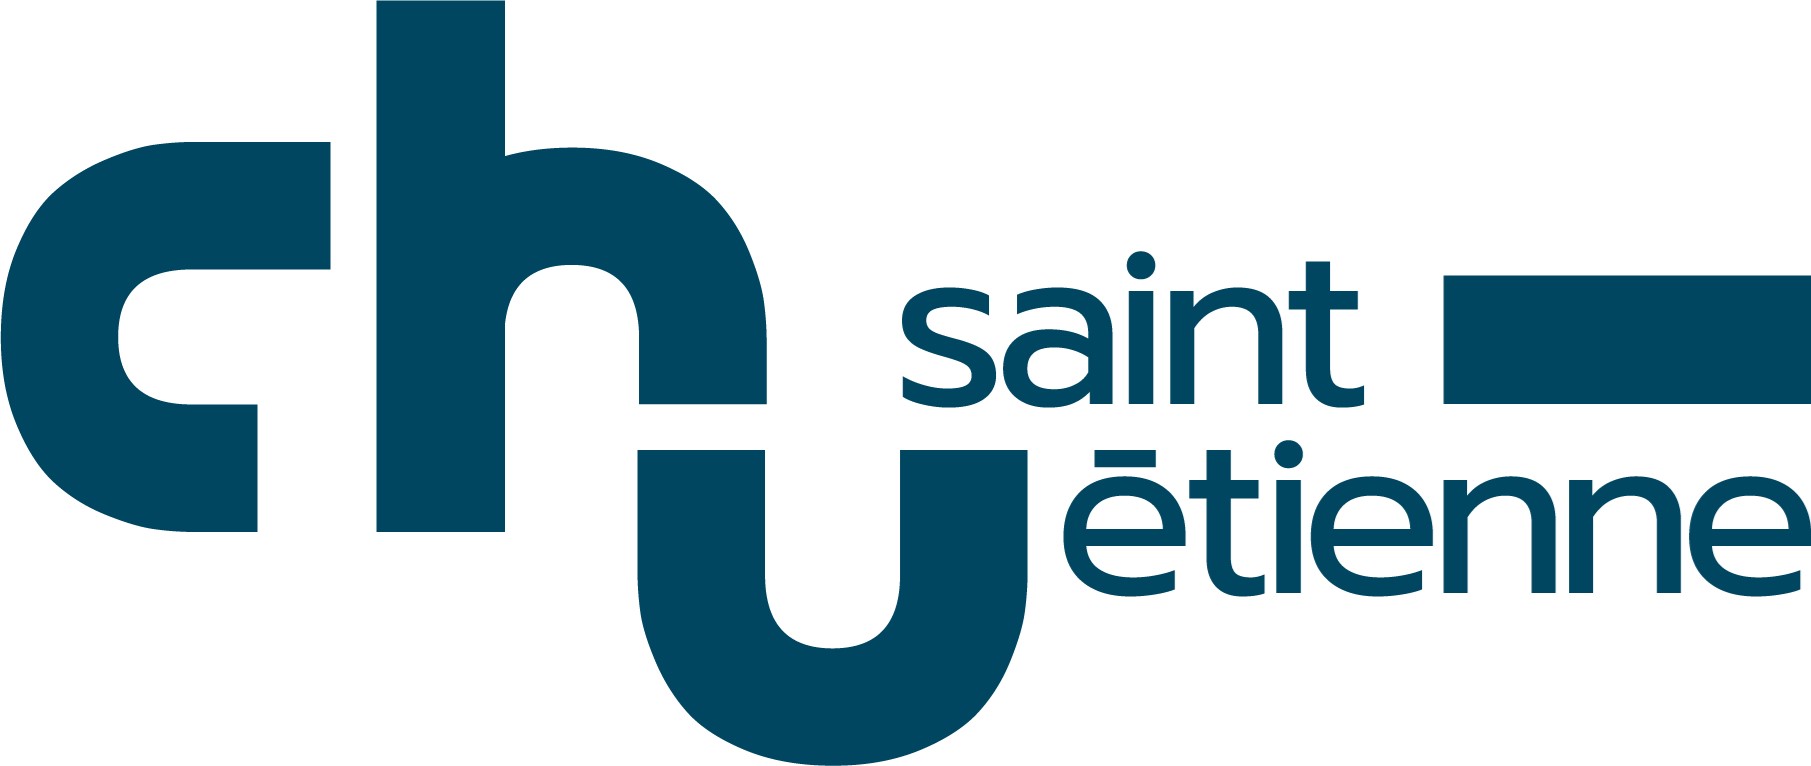 Logo CHU St Etienne